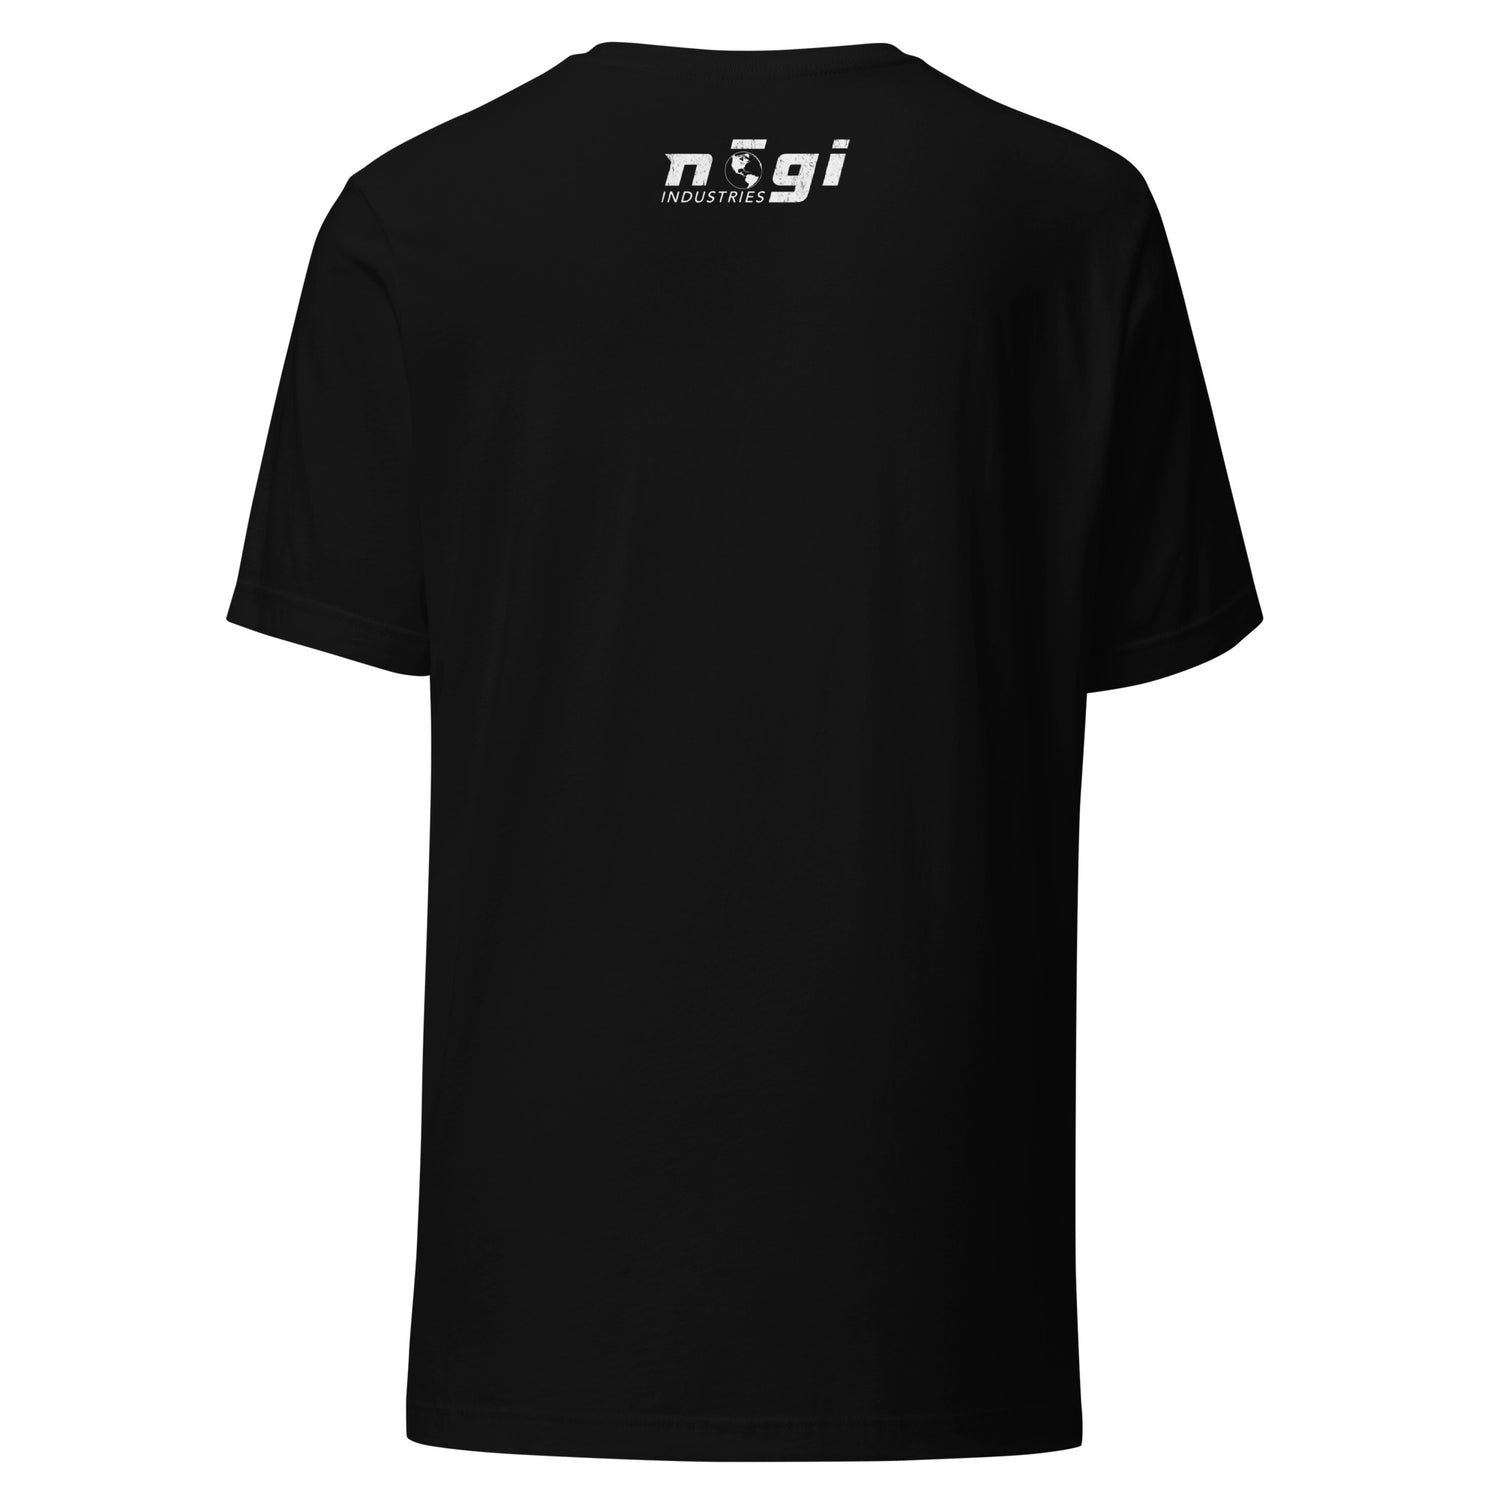 Jiujitsu Worldwide Unisex T-Shirt by Nogi Industries